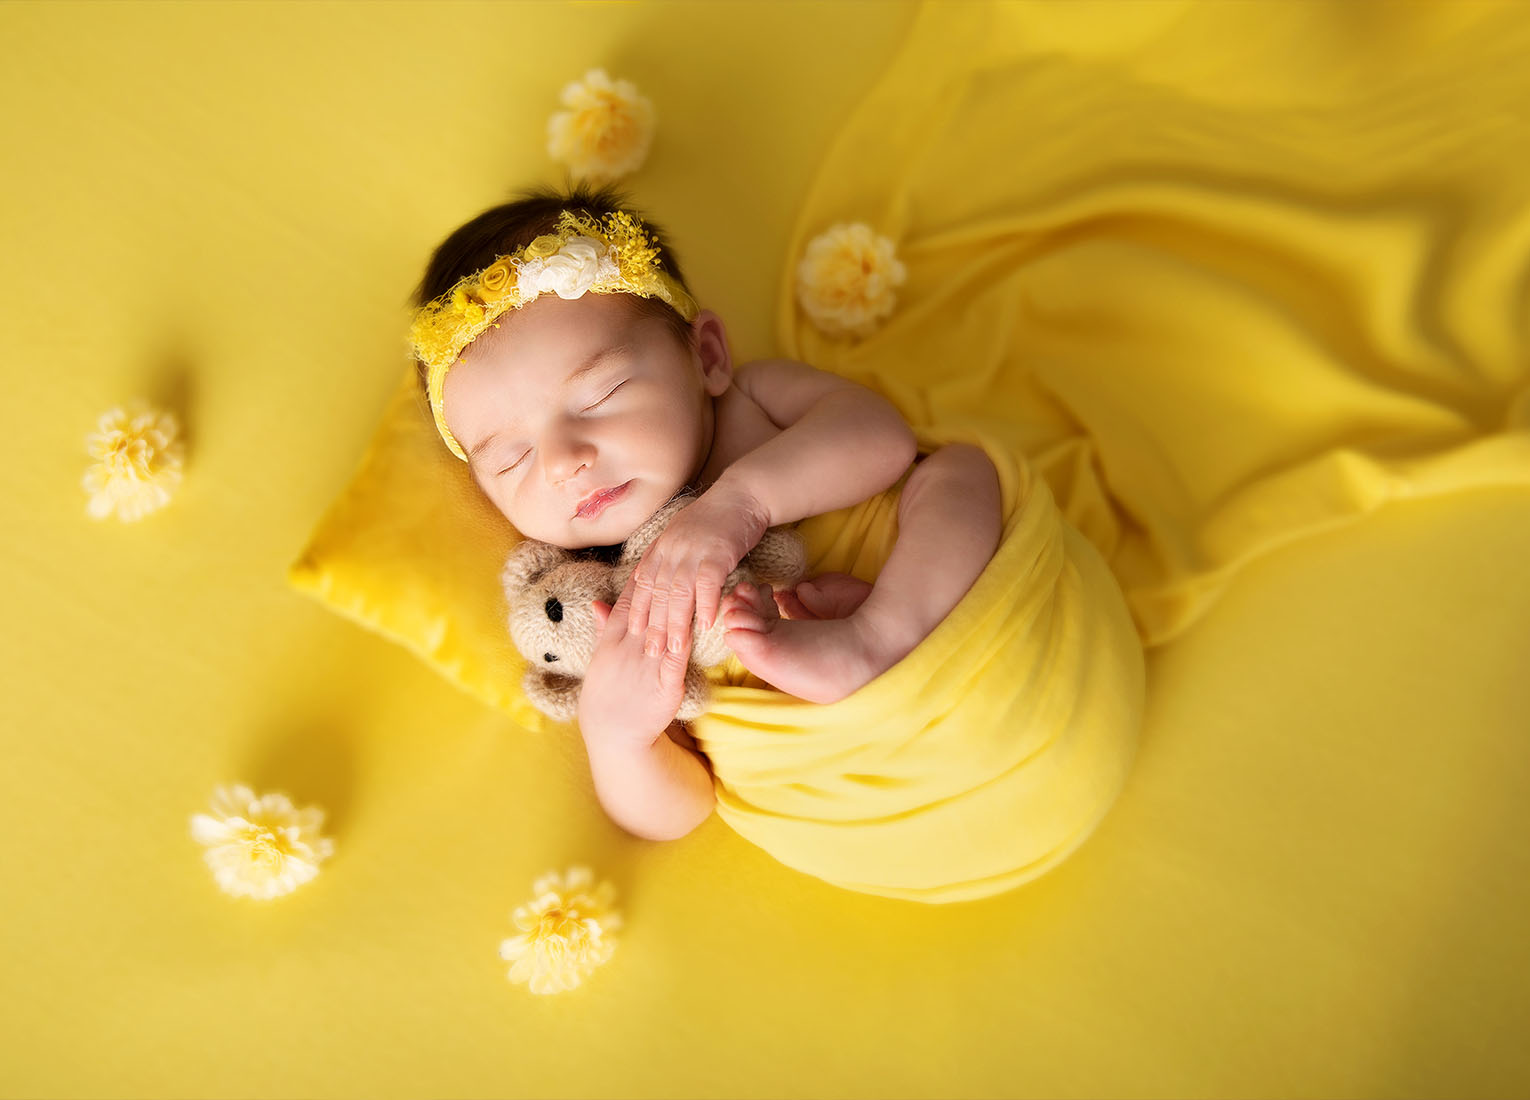 Newborn Photograph - Portfolio - Yellow Wrap